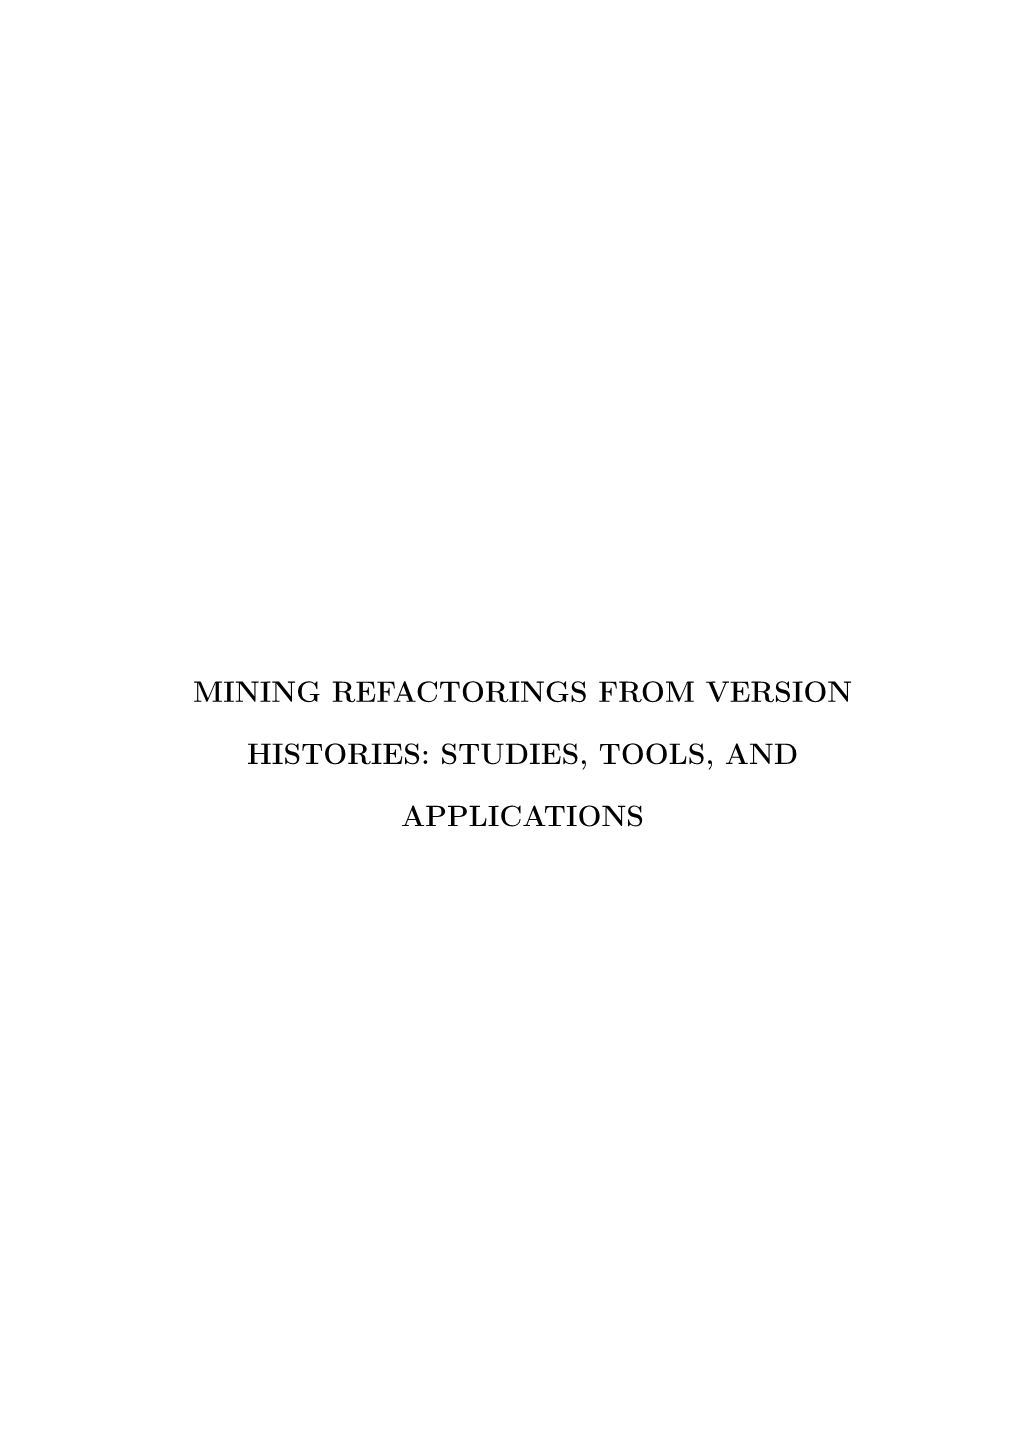 Mining Refactorings from Version Histories: Studies, Tools, and Applications/ Danilo Ferreira E Silva — Belo Horizonte, 2020